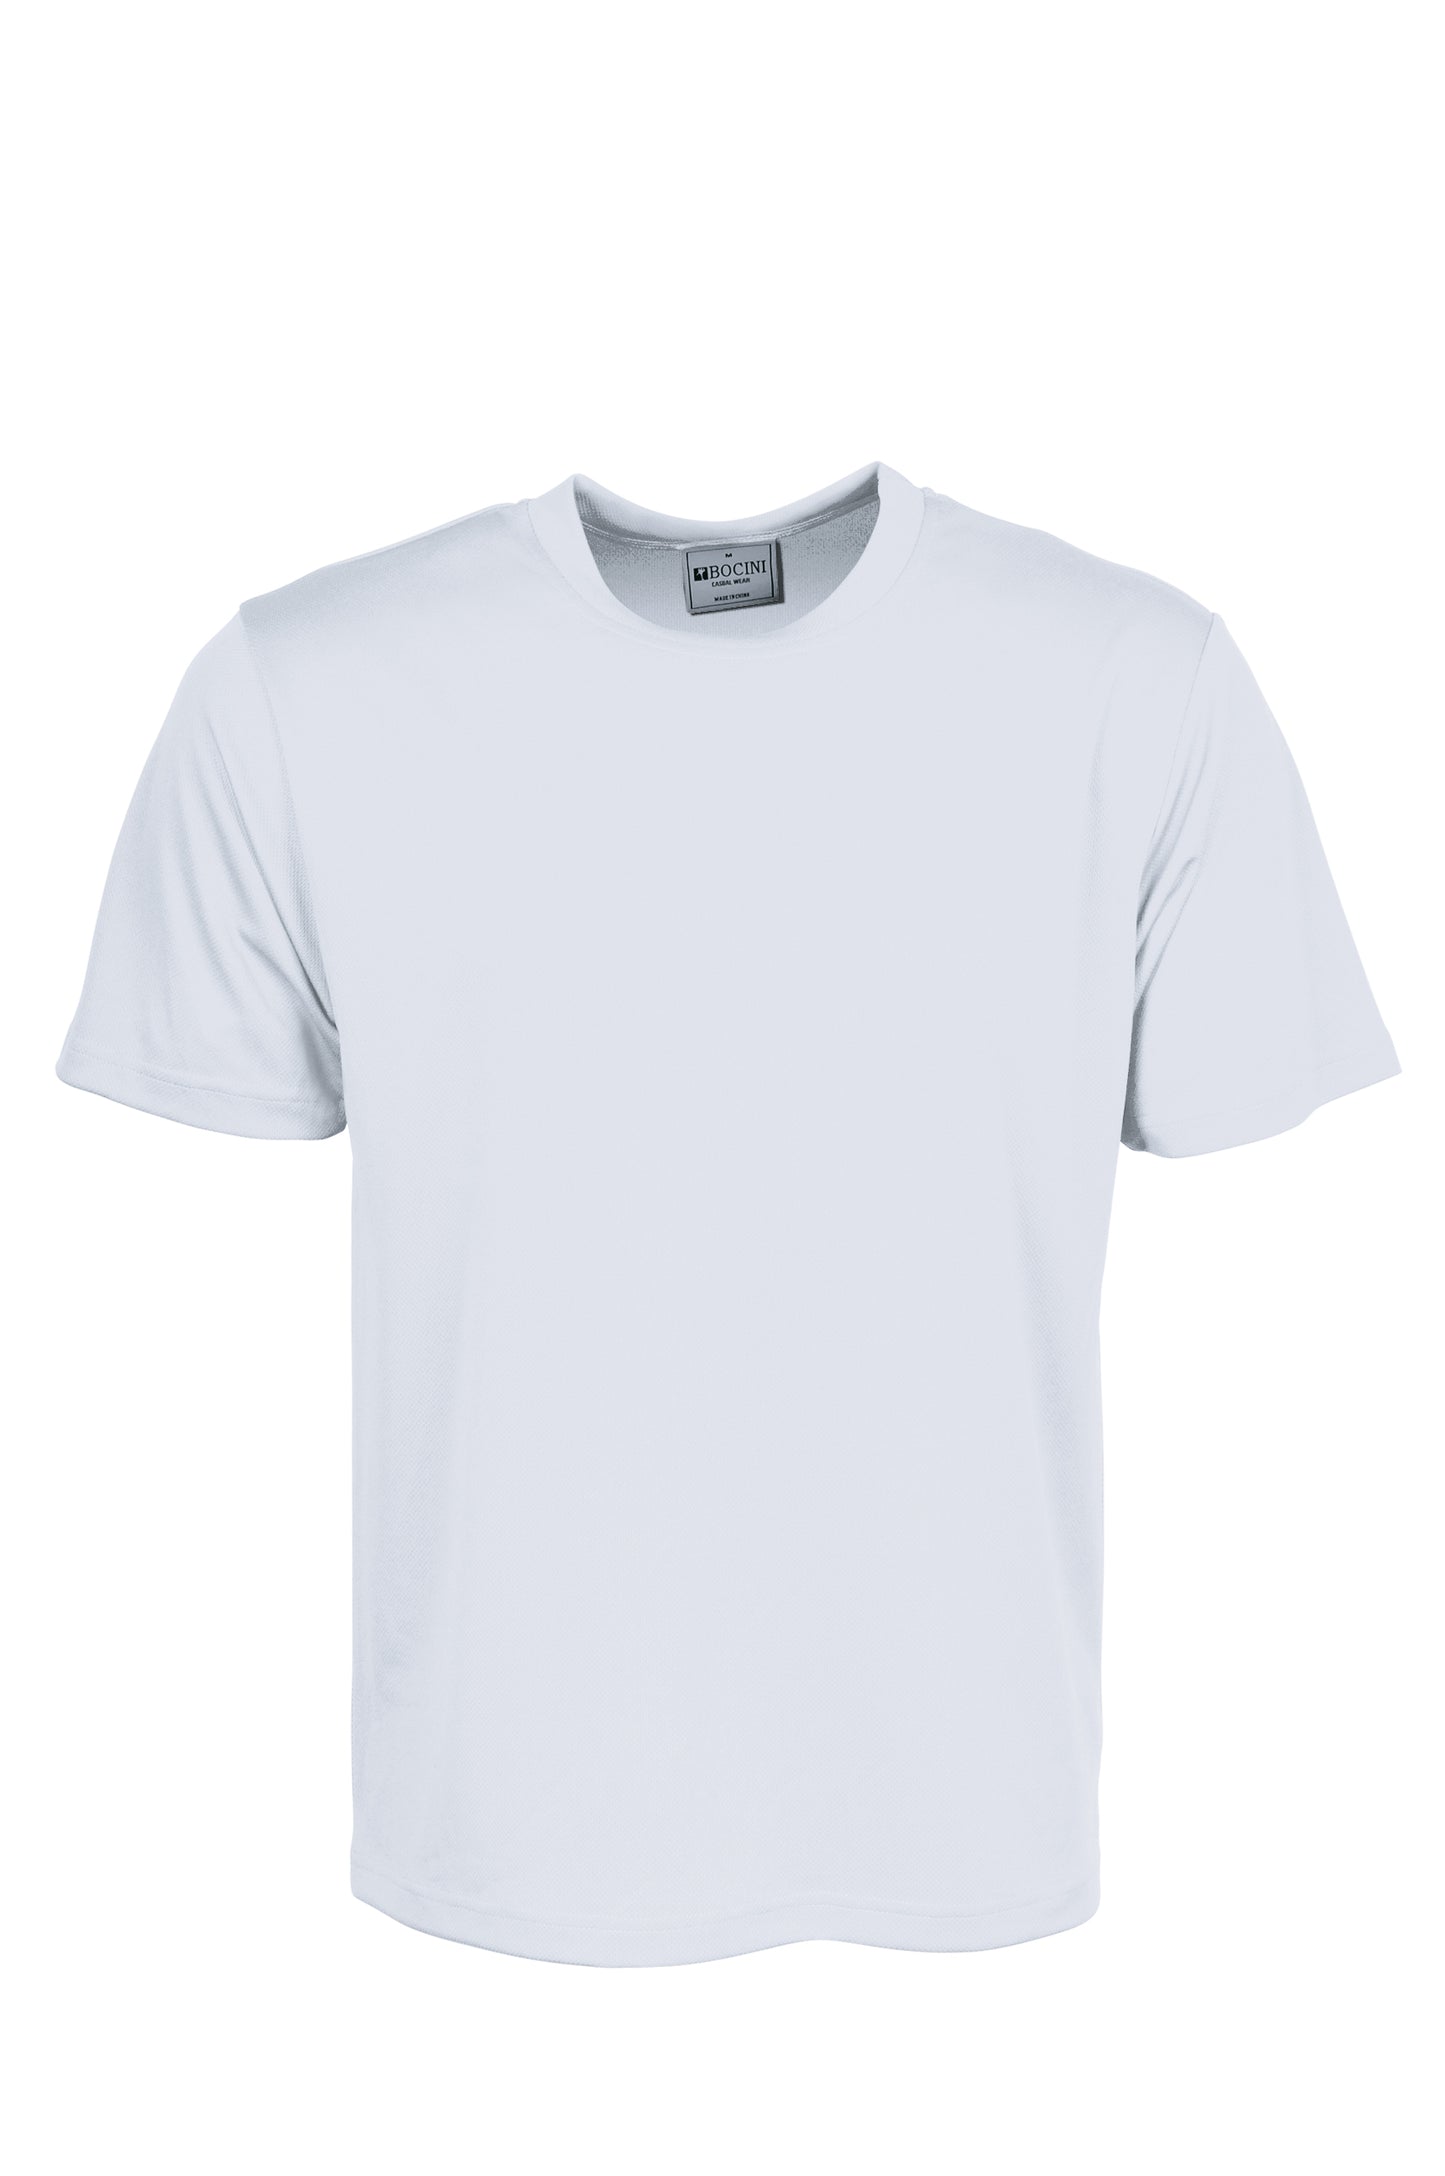 Bocini Adults Plain Breezeway Micromesh Tee Shirt 2nd Colour -(CT1207)